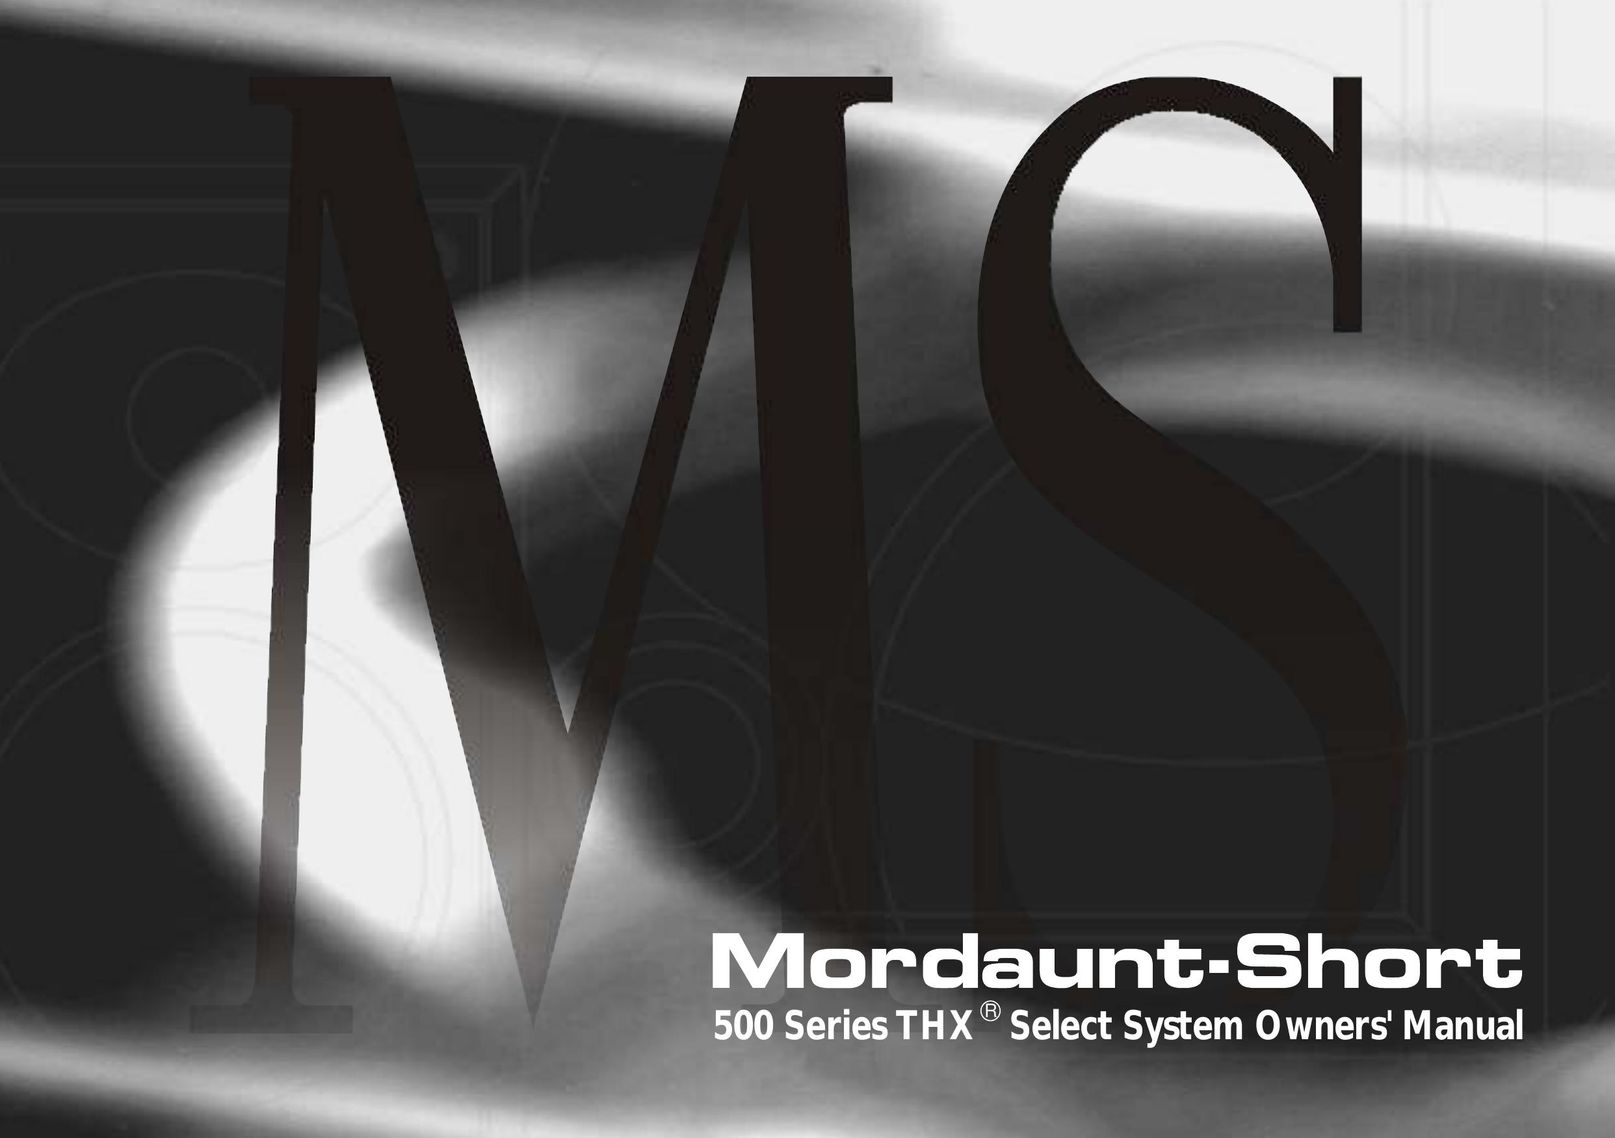 Mordaunt-Short 500 Series THX Speaker User Manual